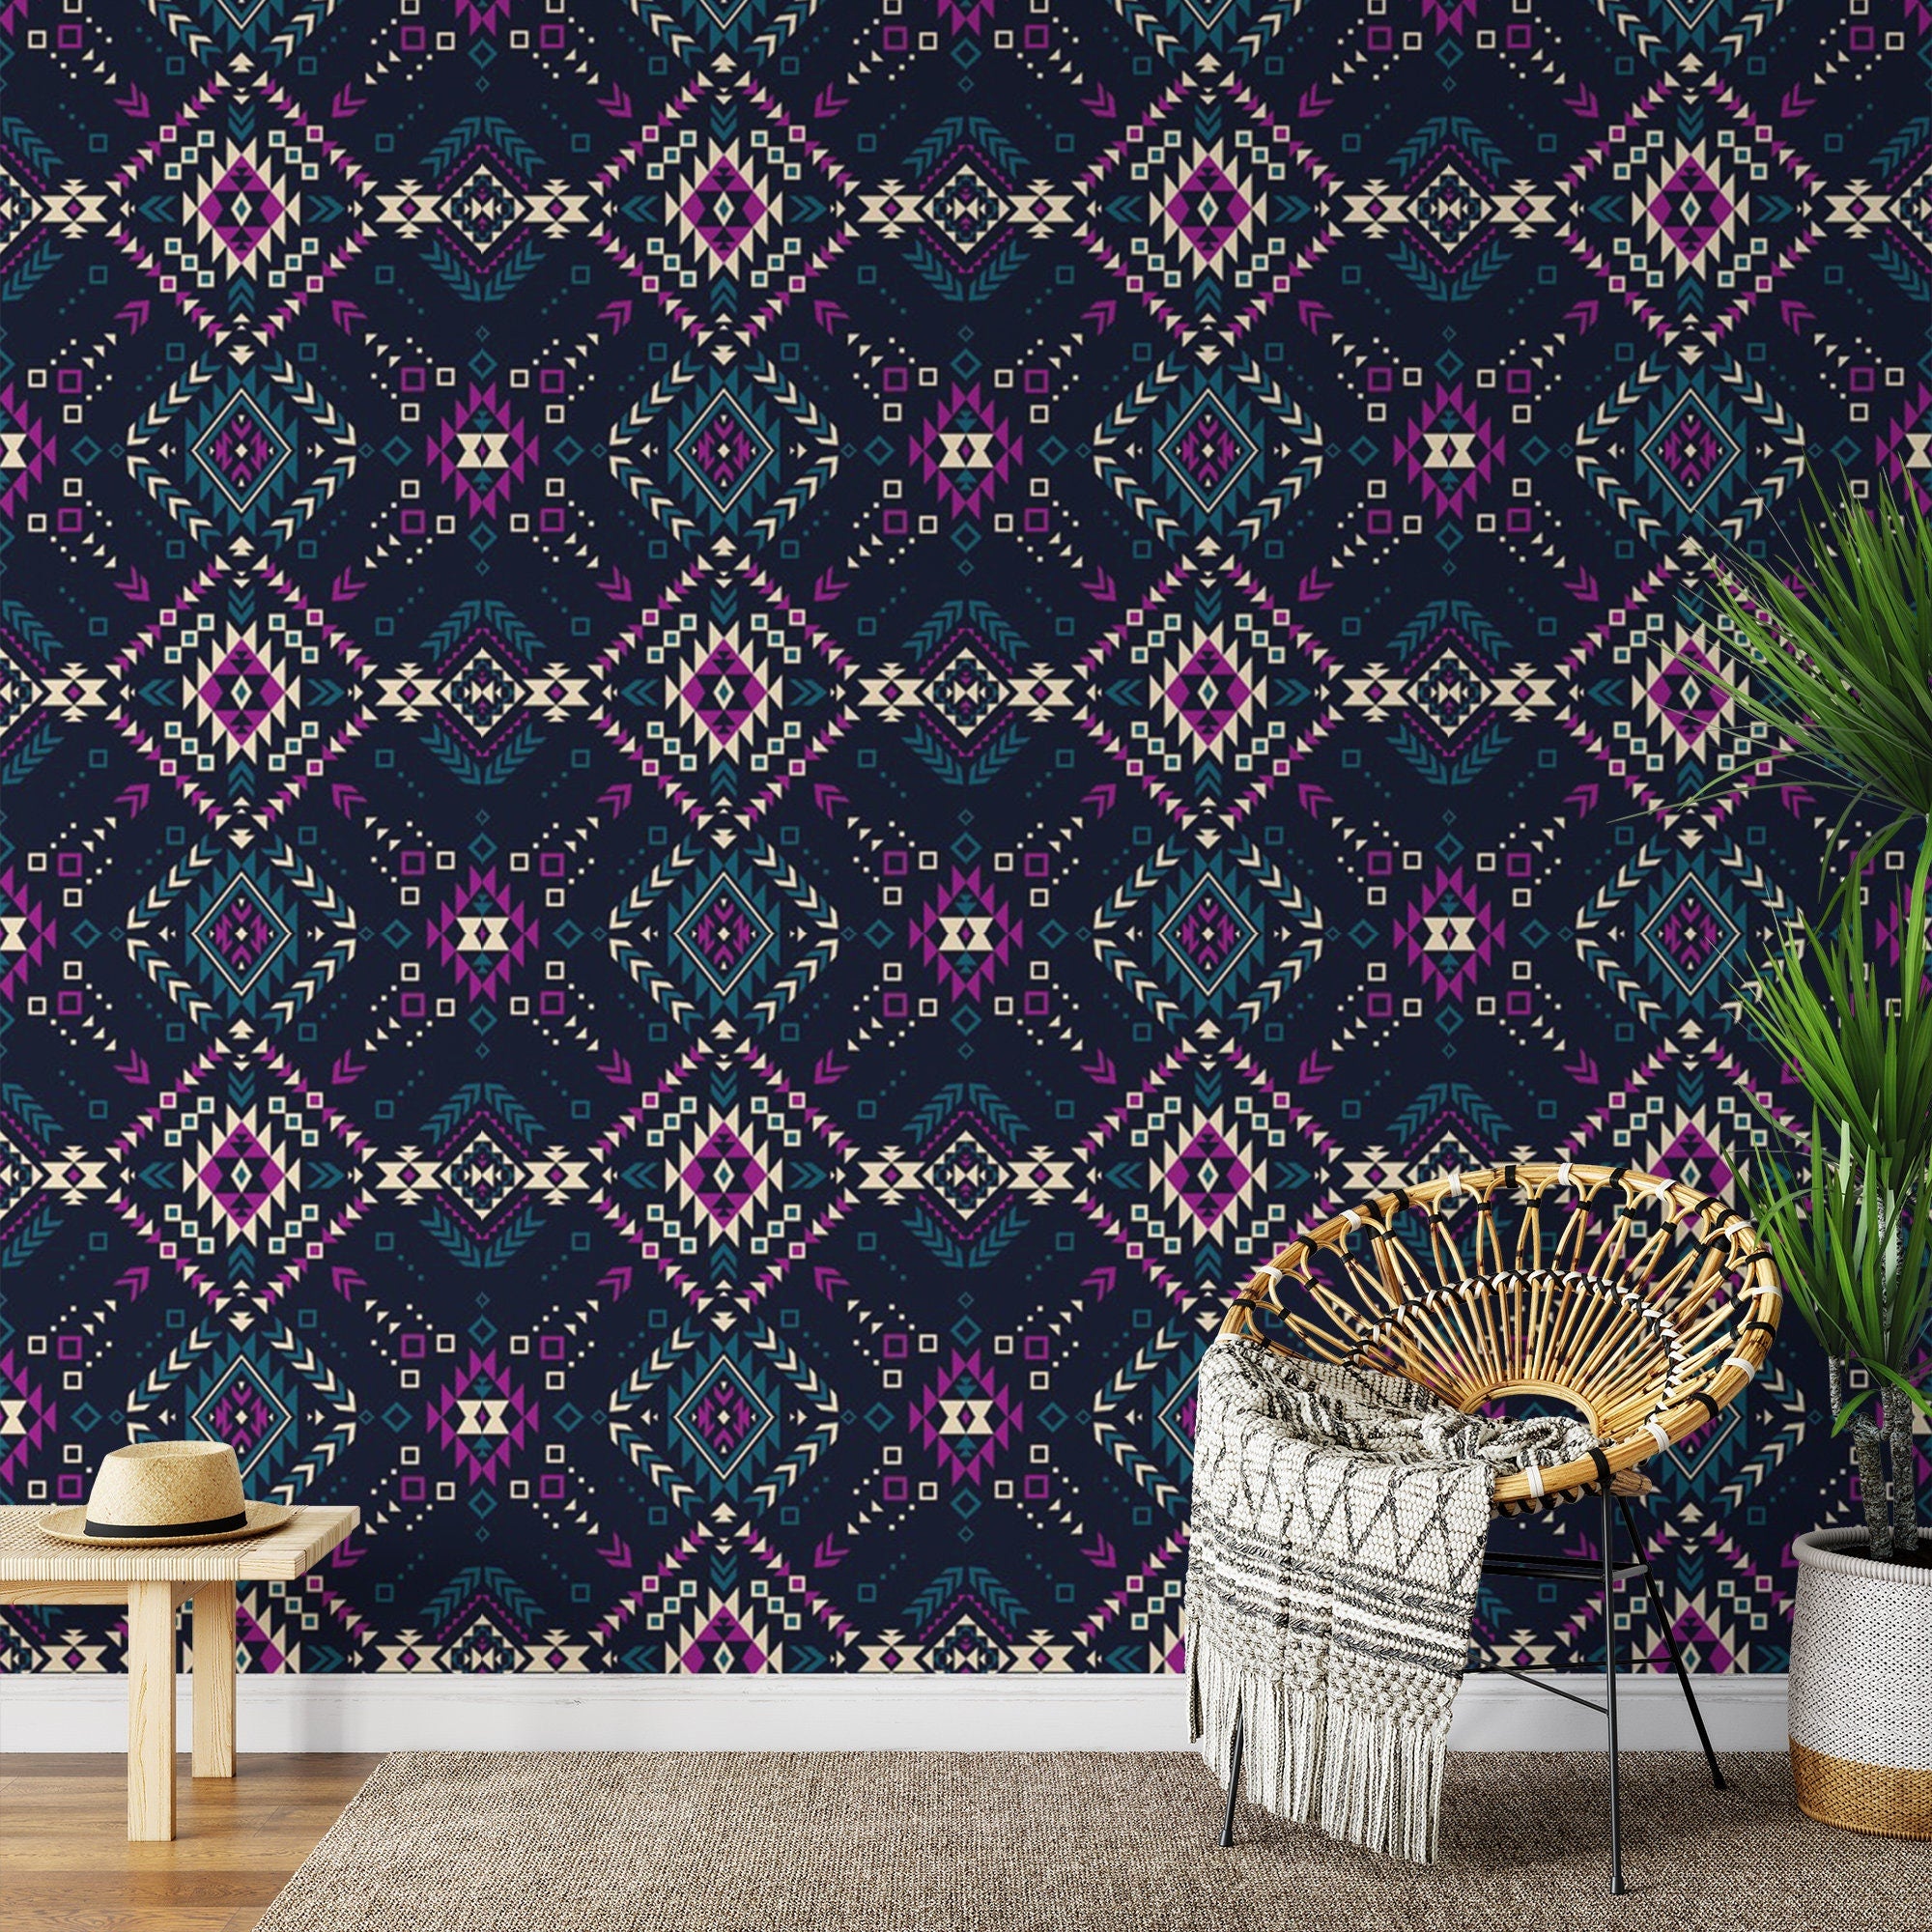 aztec tribal patterns wallpaper